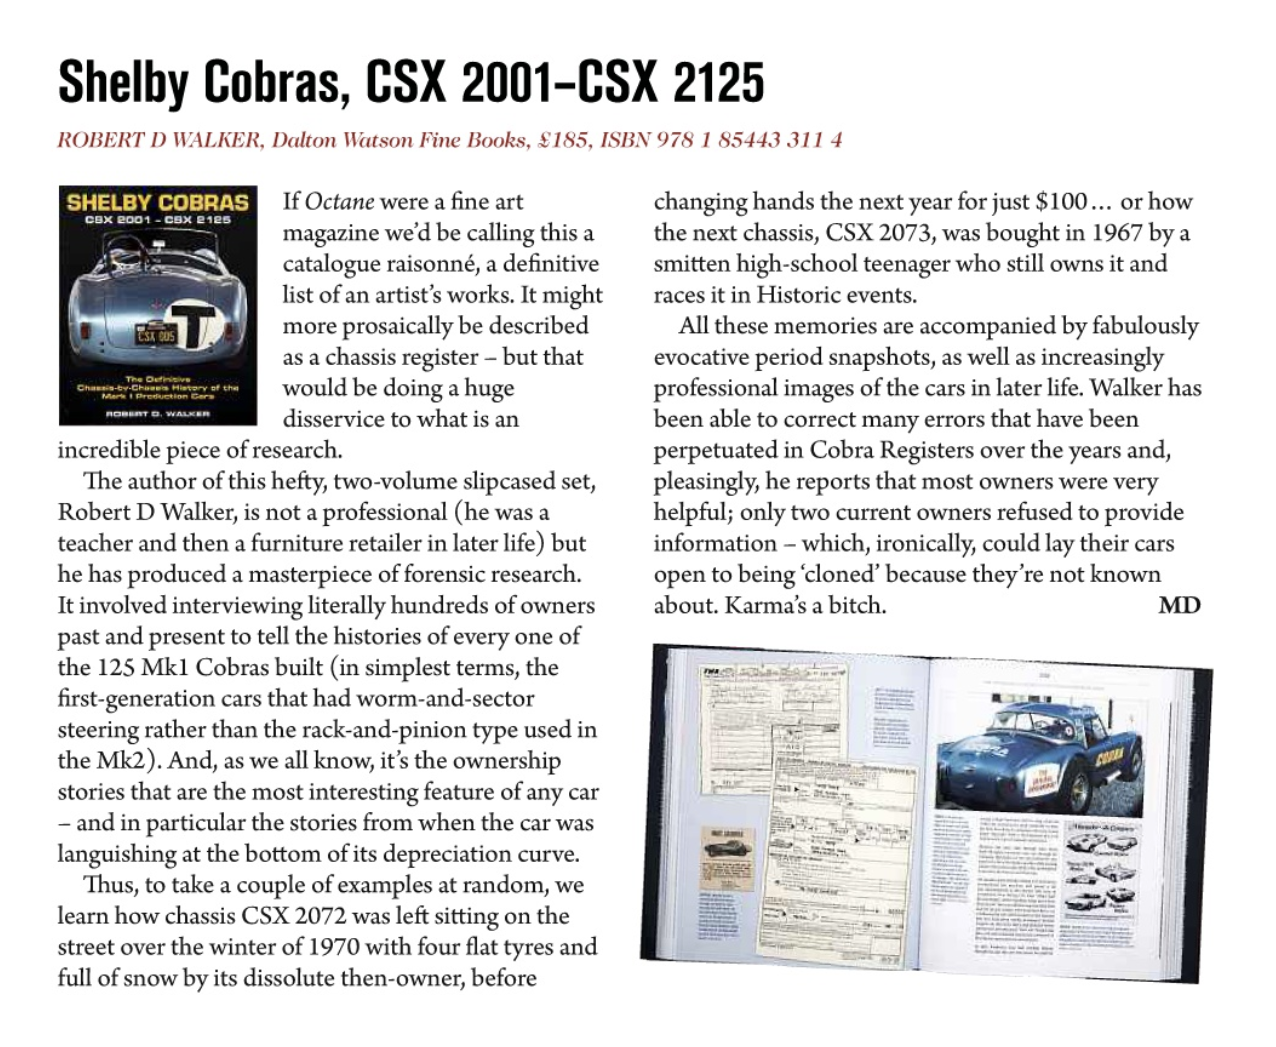 Shelby Cobras: CSX 2001-CSX 2125